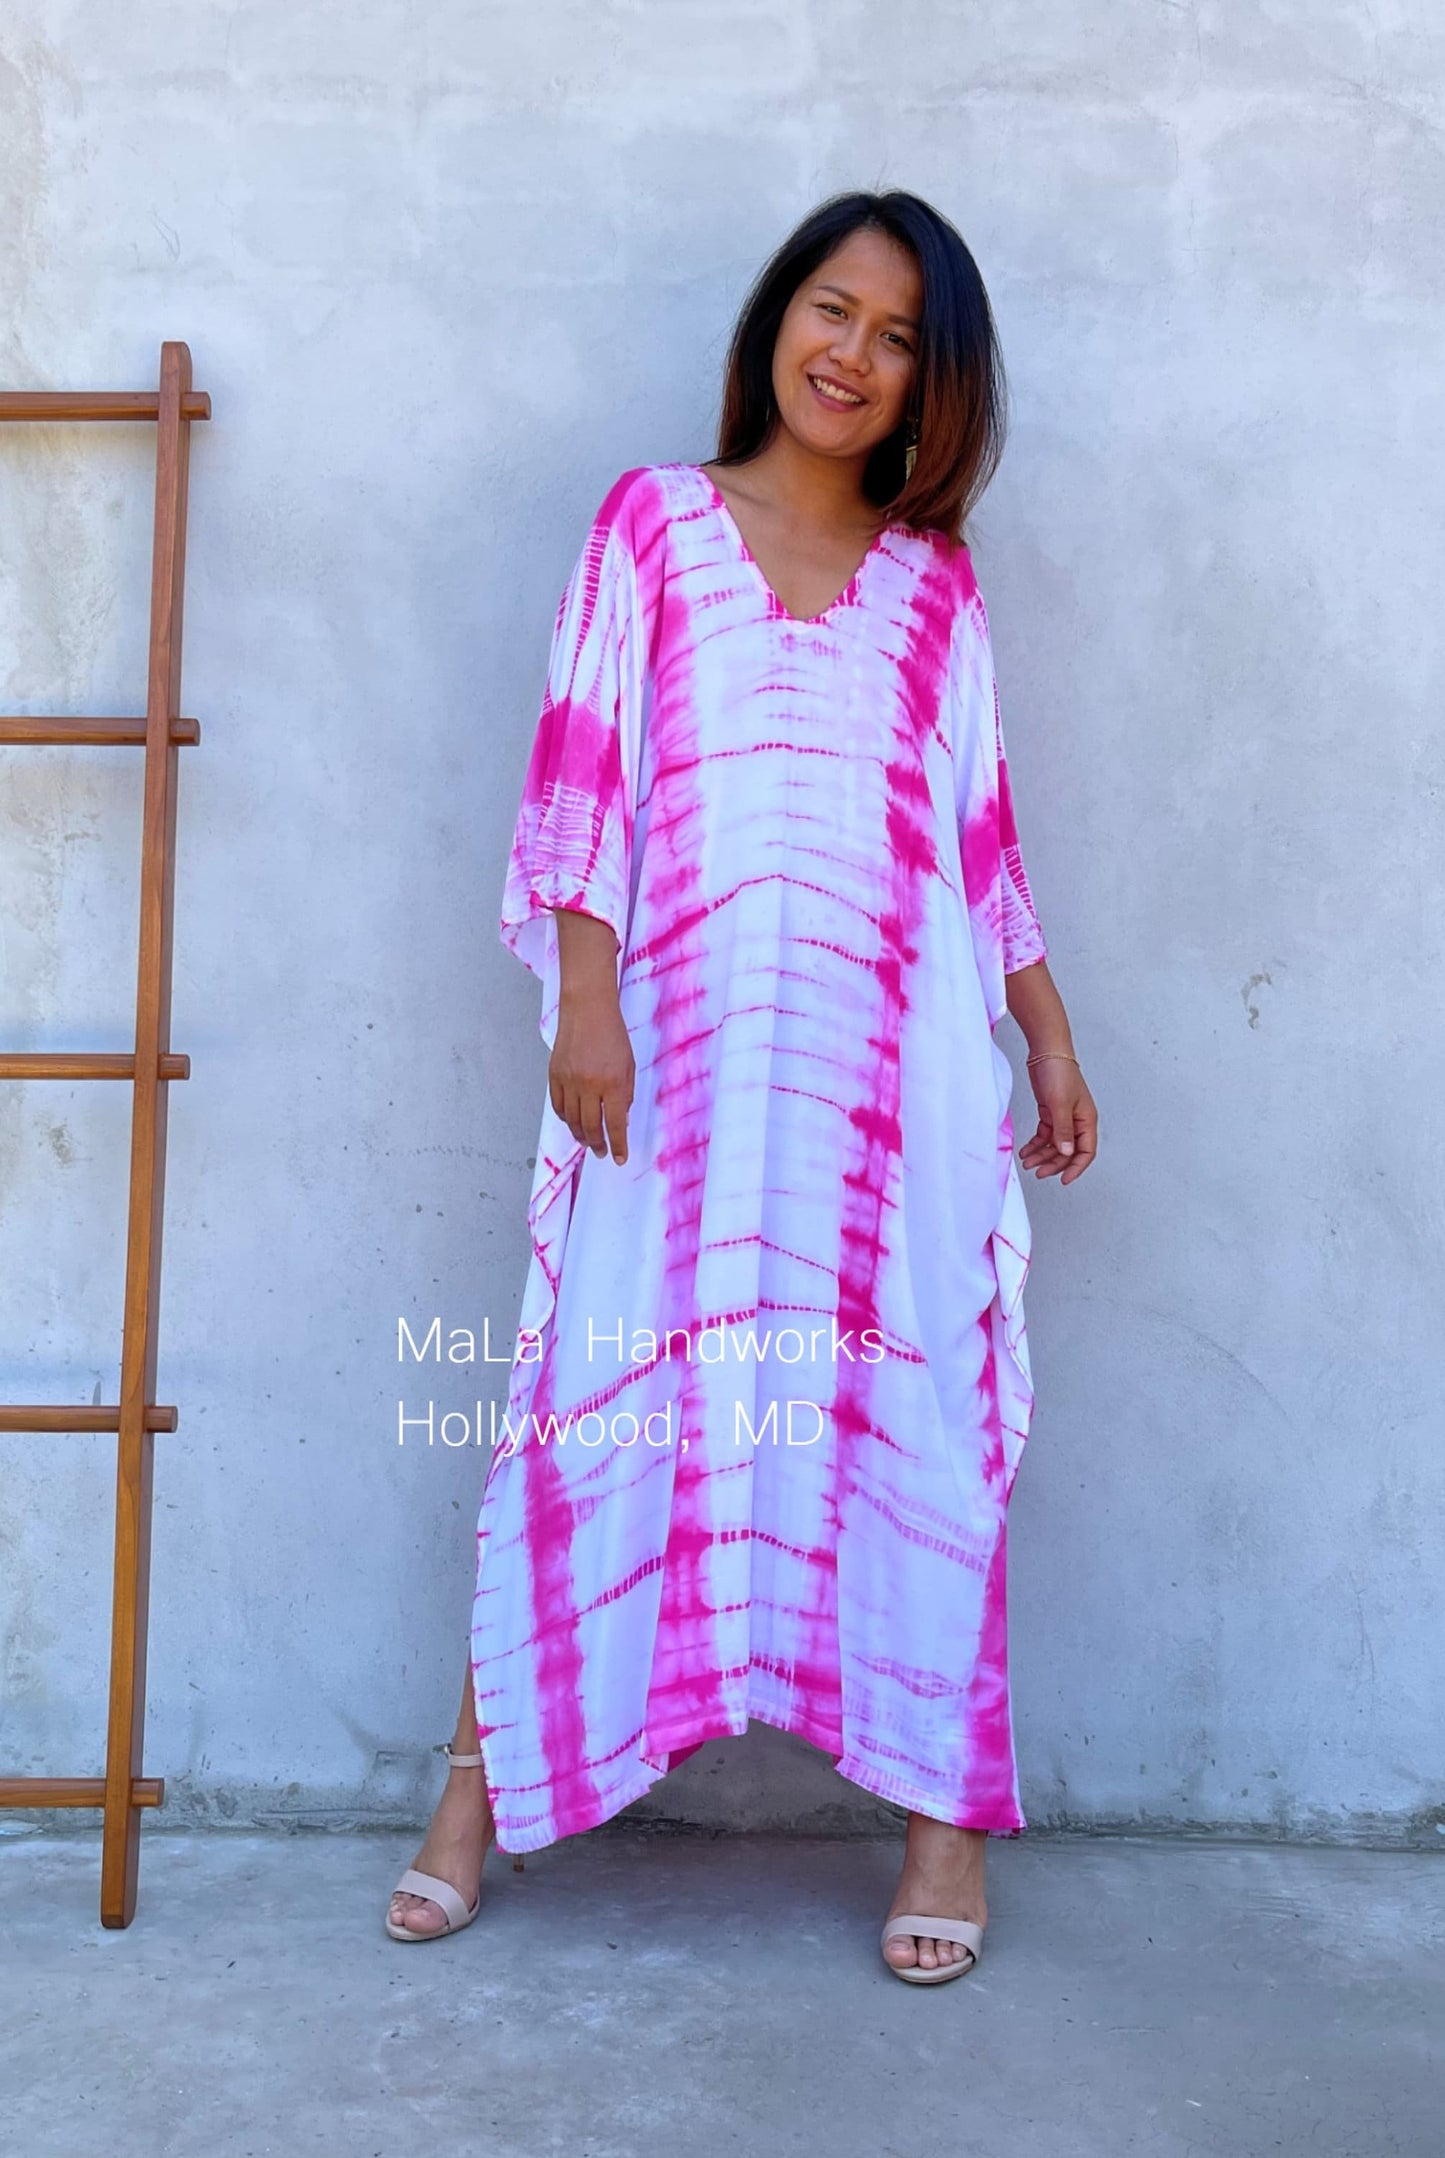 MALA handworks  Mala Kaftan in White and Pink Tie Dye